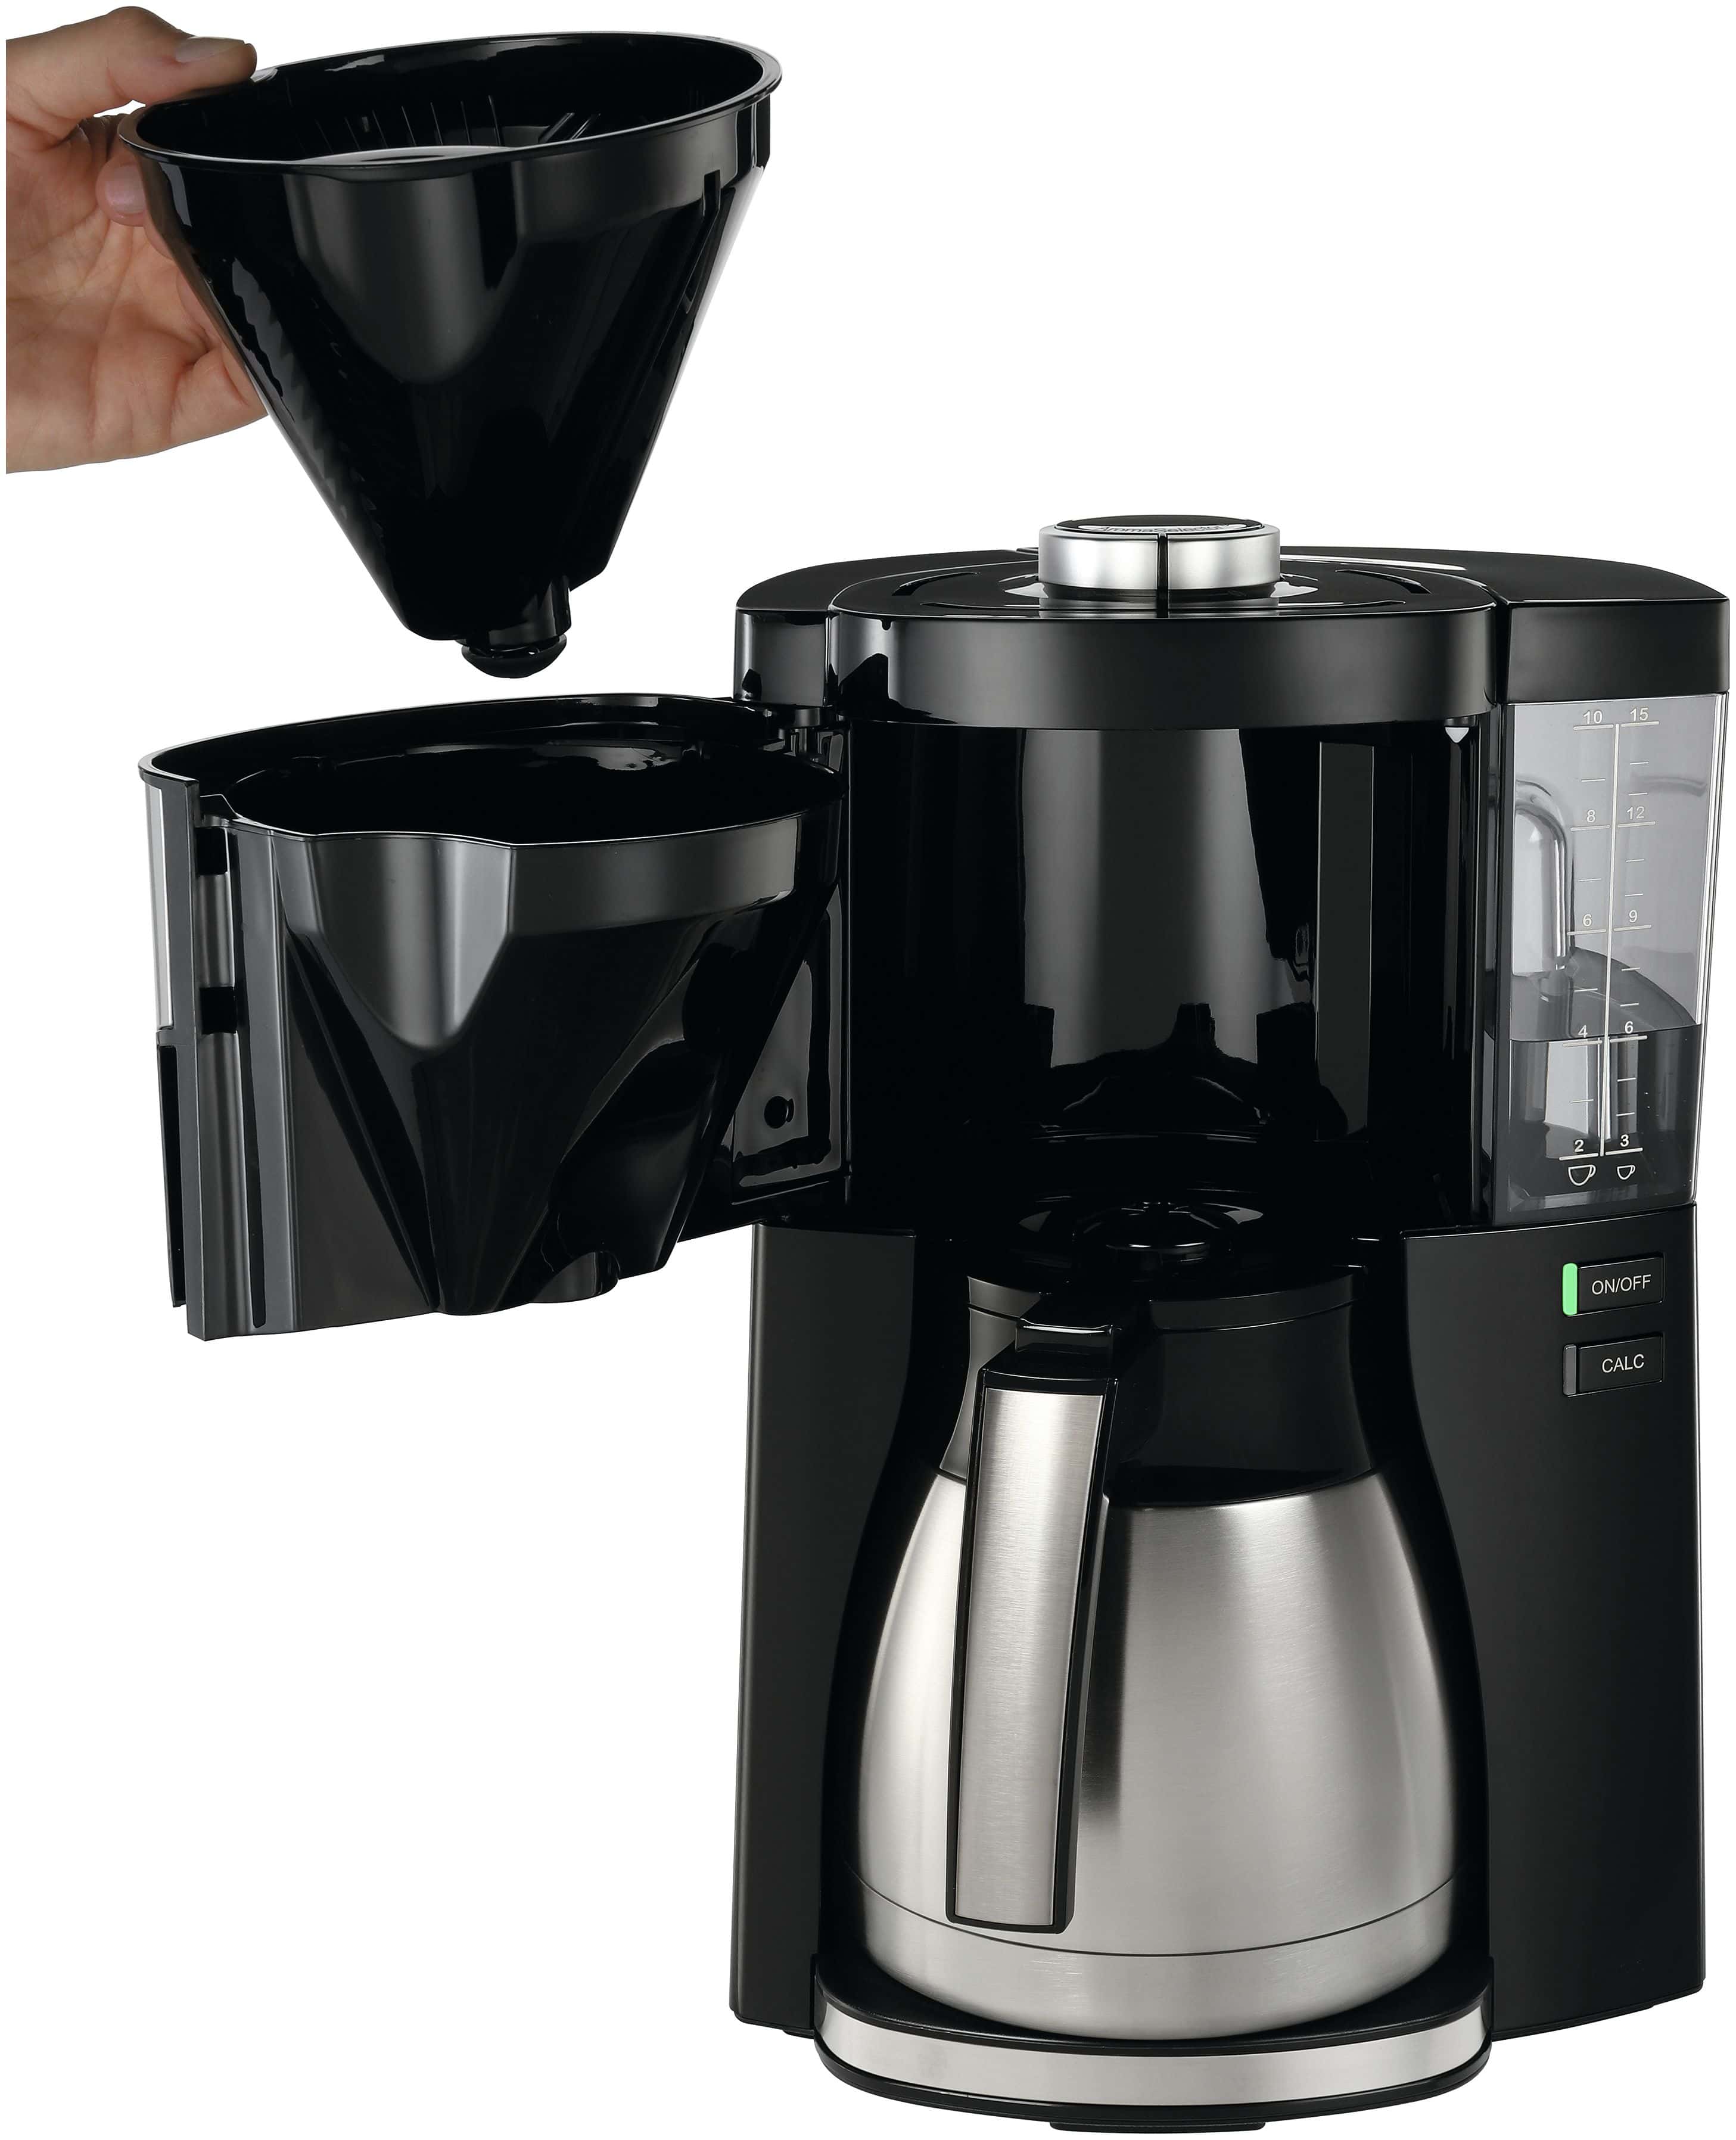 Melitta 1025-16 Look V 1,2 Filterkaffeemaschine Technomarkt l Thermo Therm 10 Tassen expert Perfection von